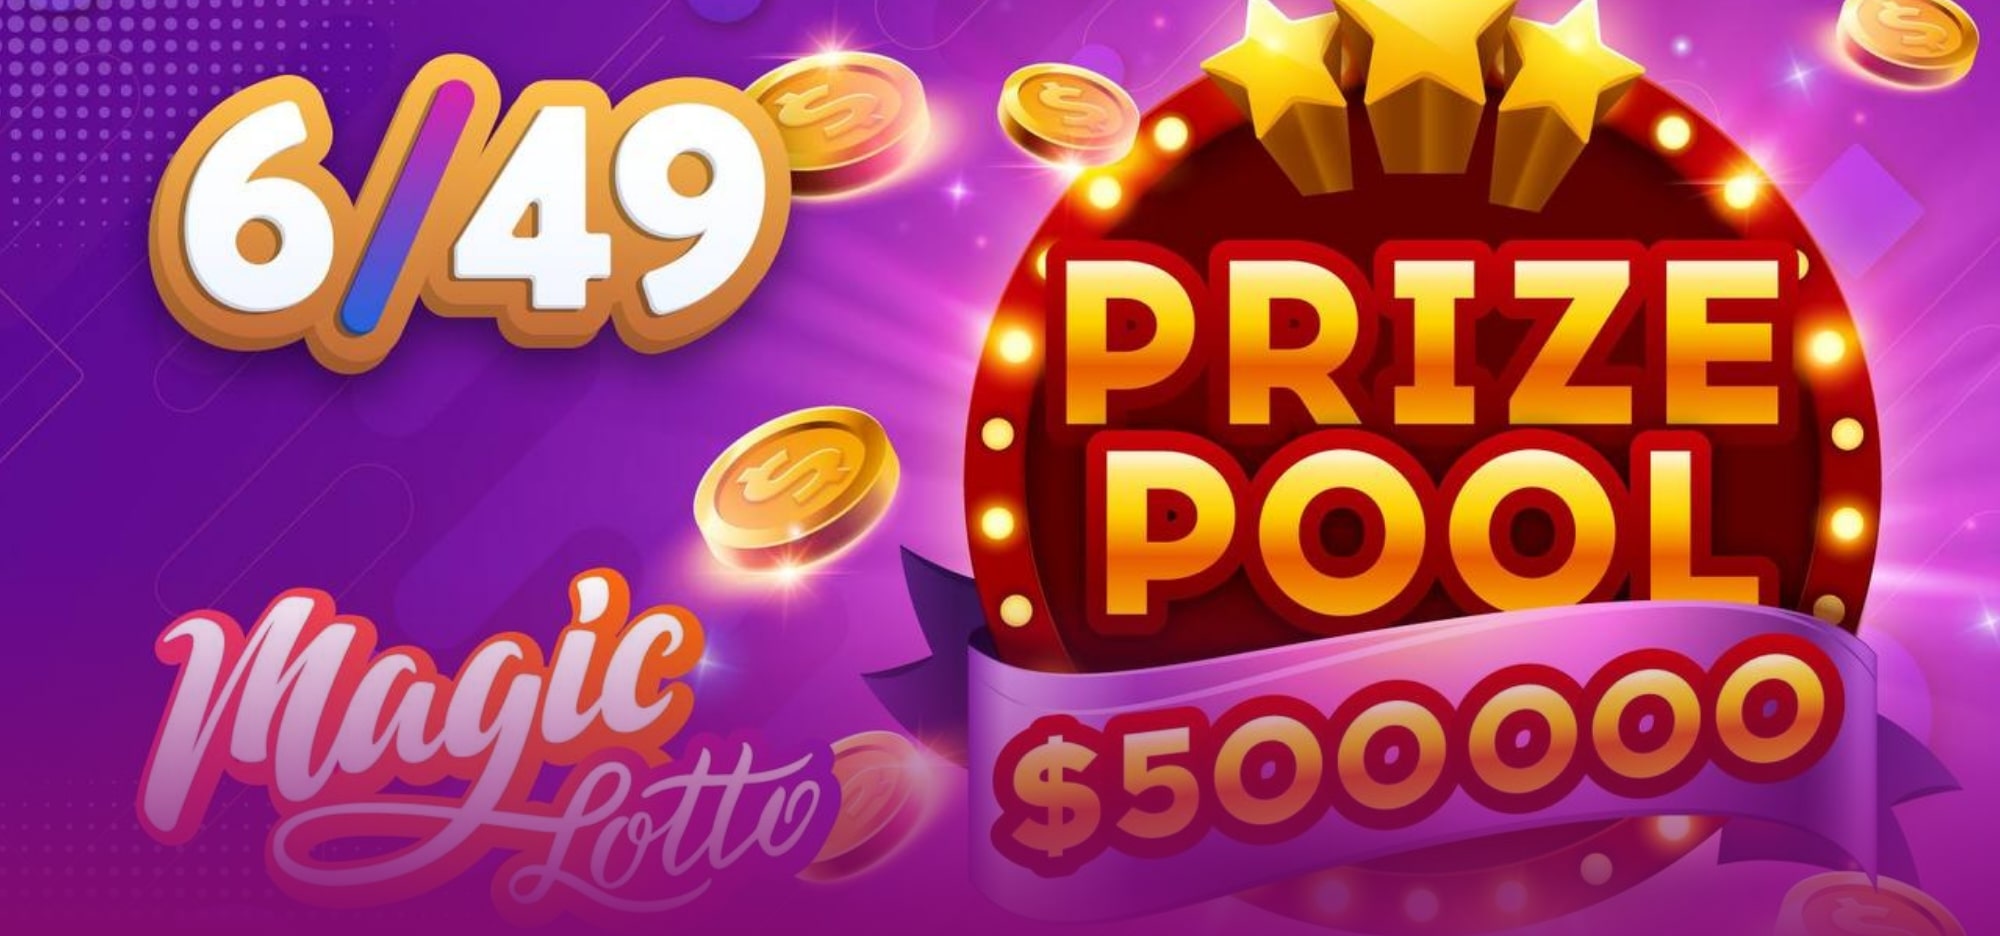 Lotto 6/49: premio de $500,000